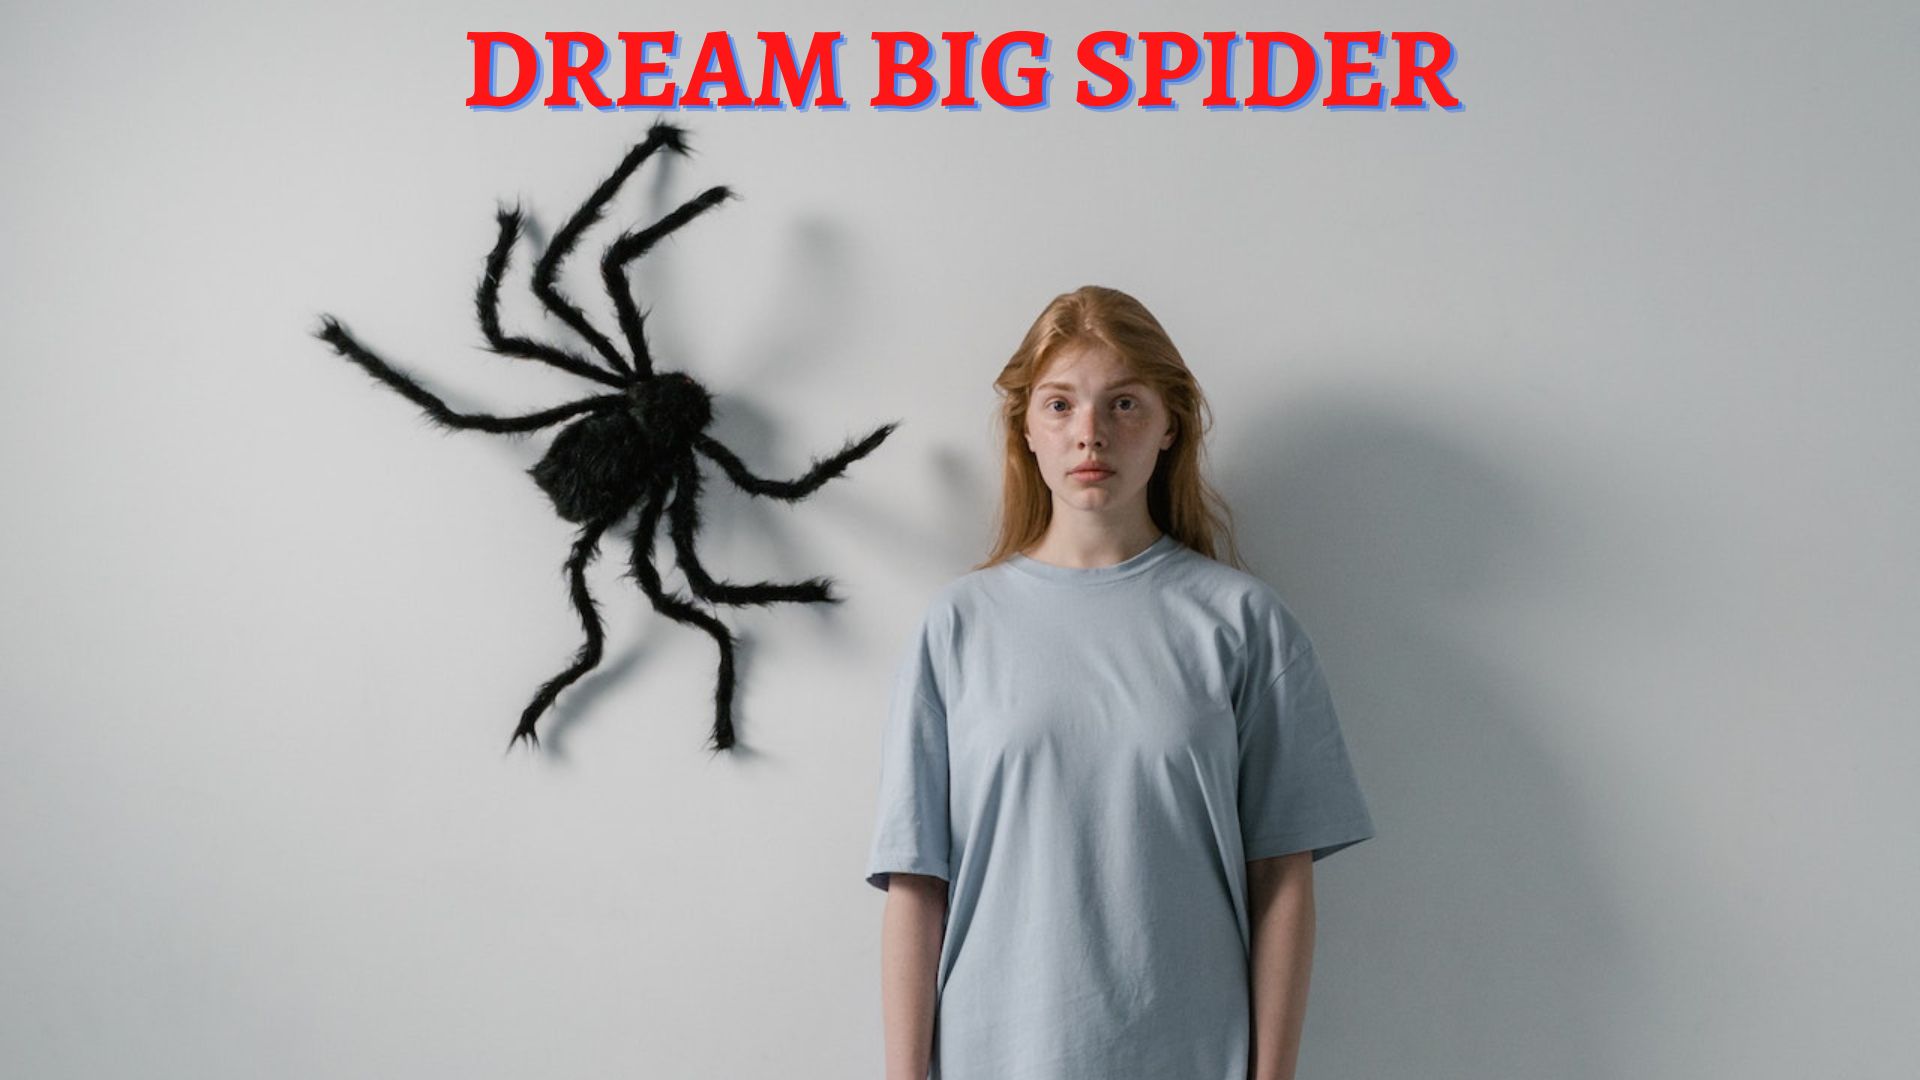 Dream Big Spider Signifies Success